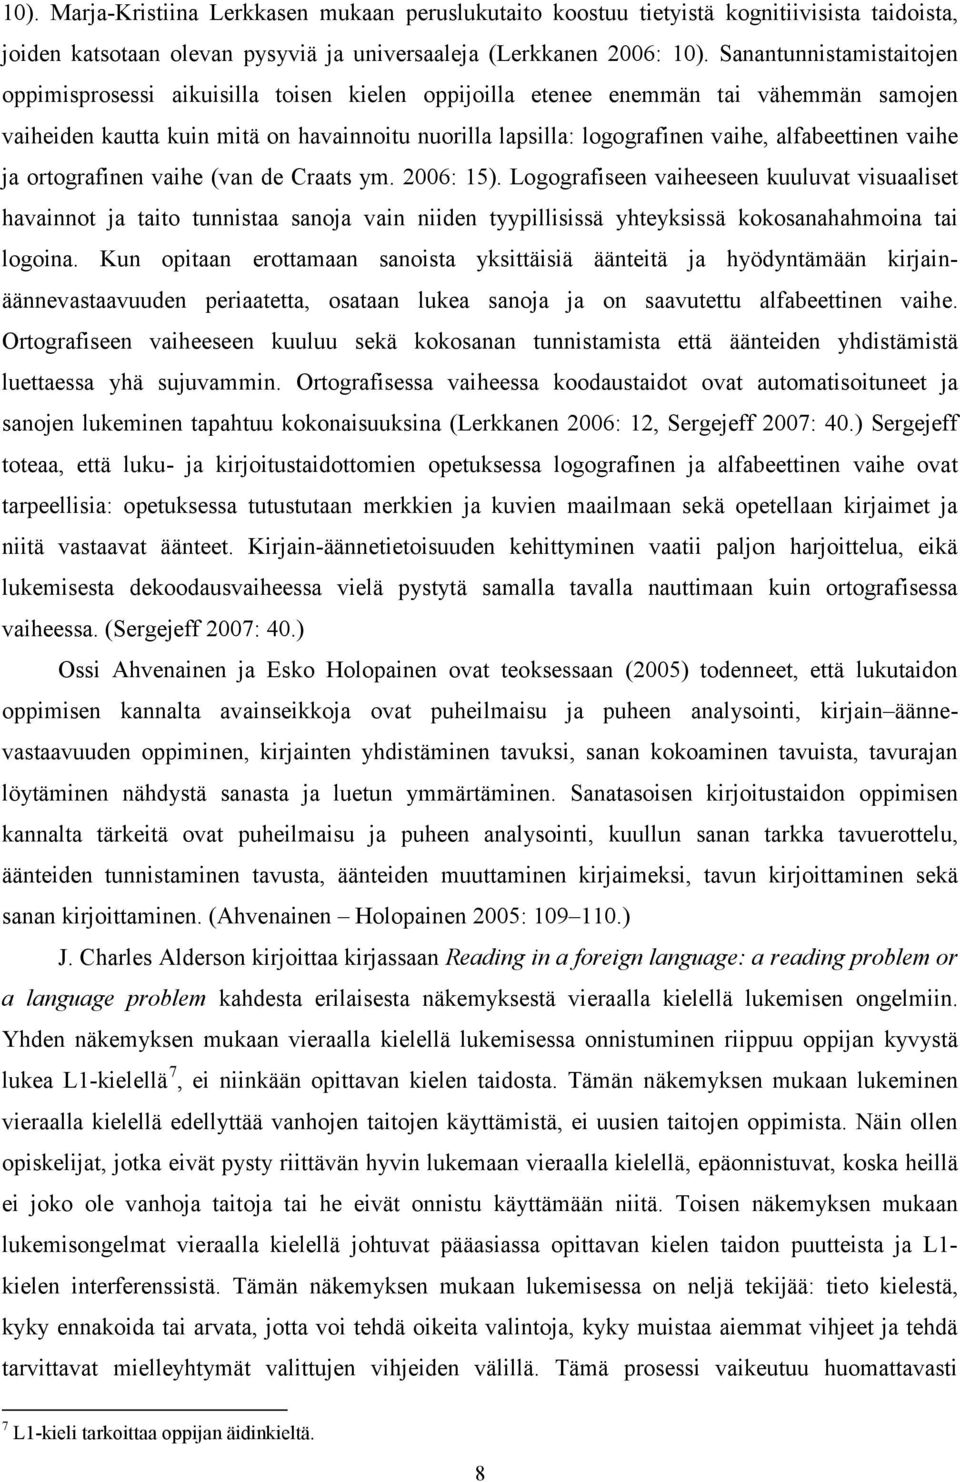 alfabeettinen vaihe ja ortografinen vaihe (van de Craats ym. 2006: 15).